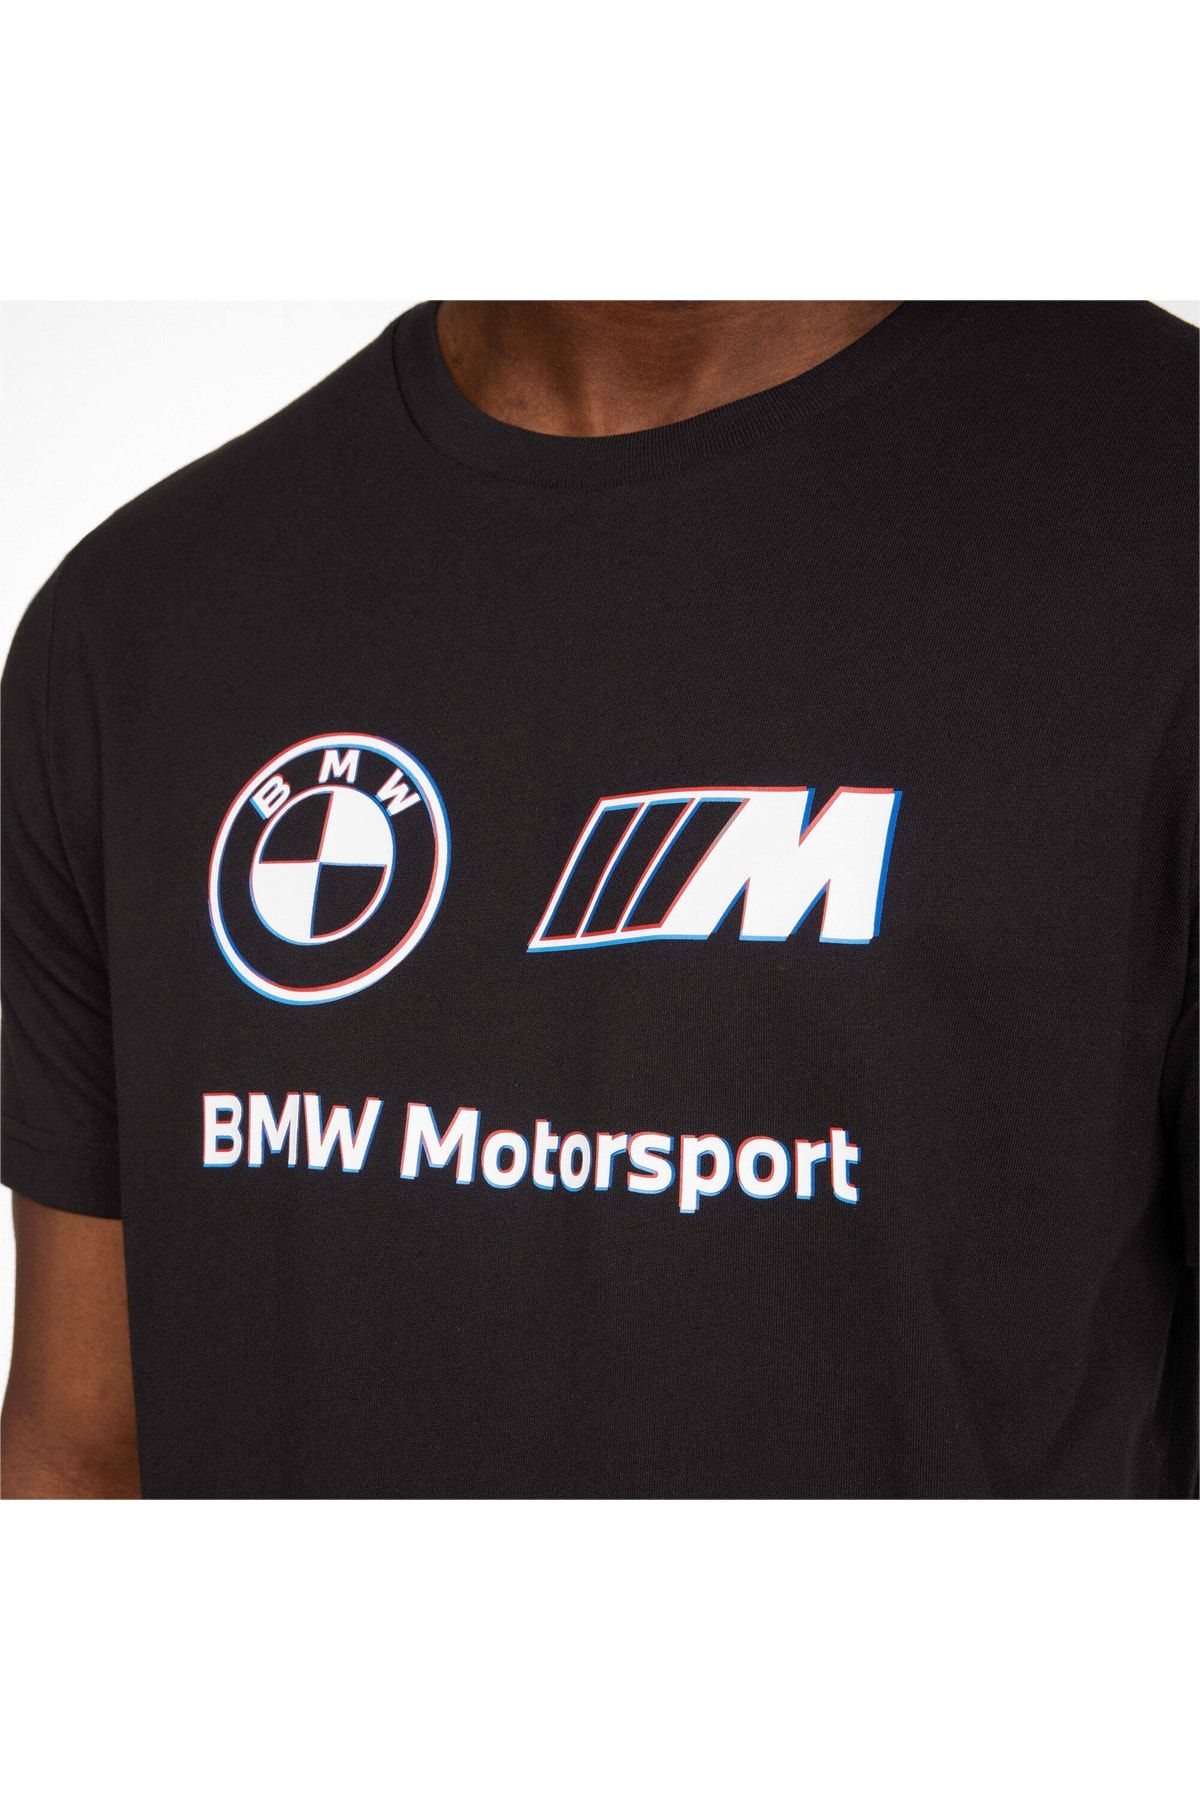 Puma Bmw M Motorsport Logo Erkek Tişört